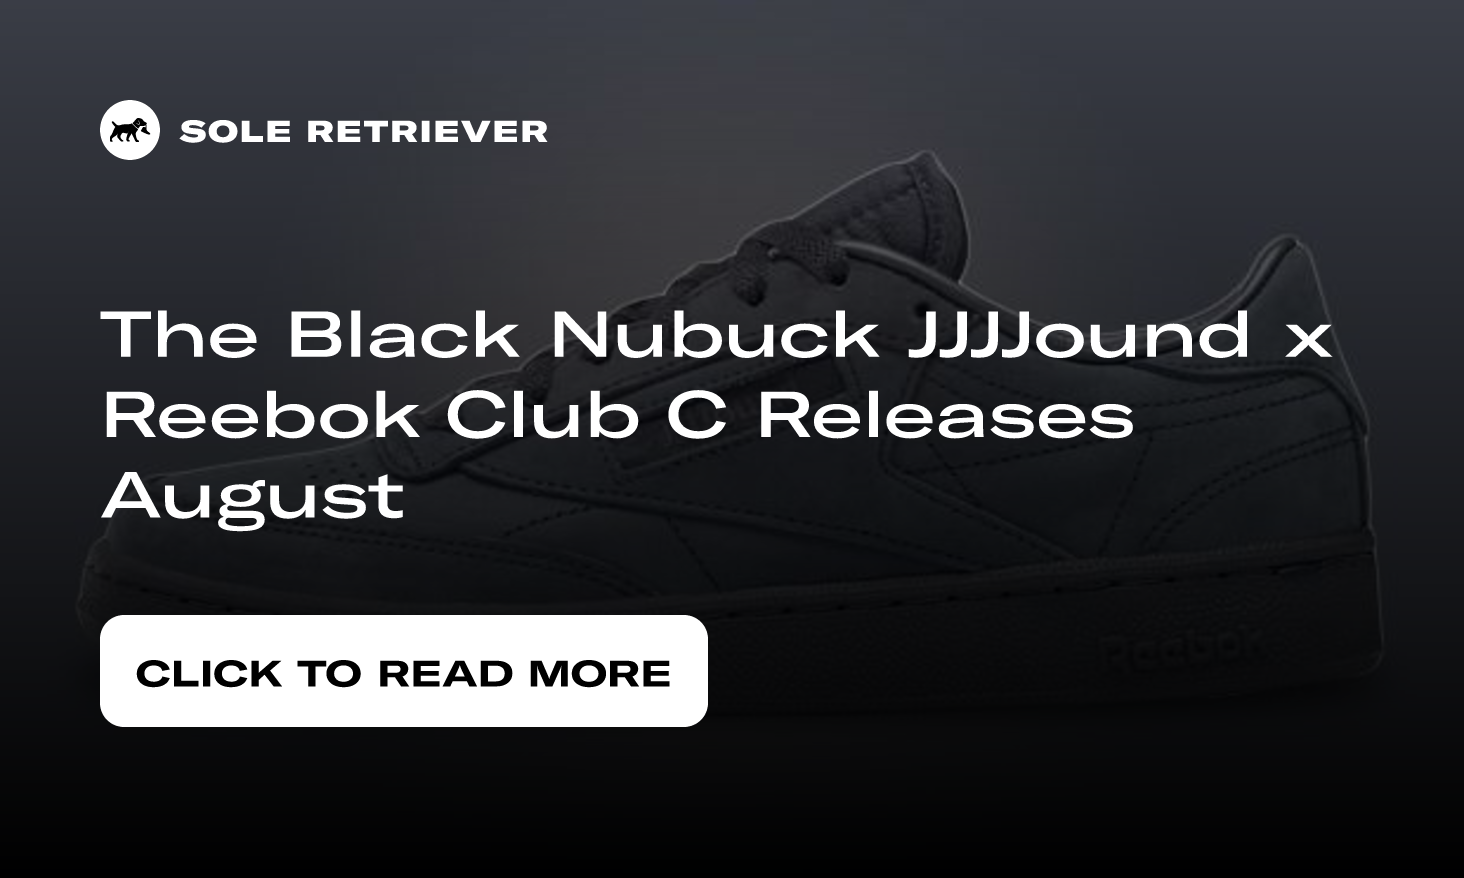 The Black Nubuck JJJJound x Reebok Club C Releases August